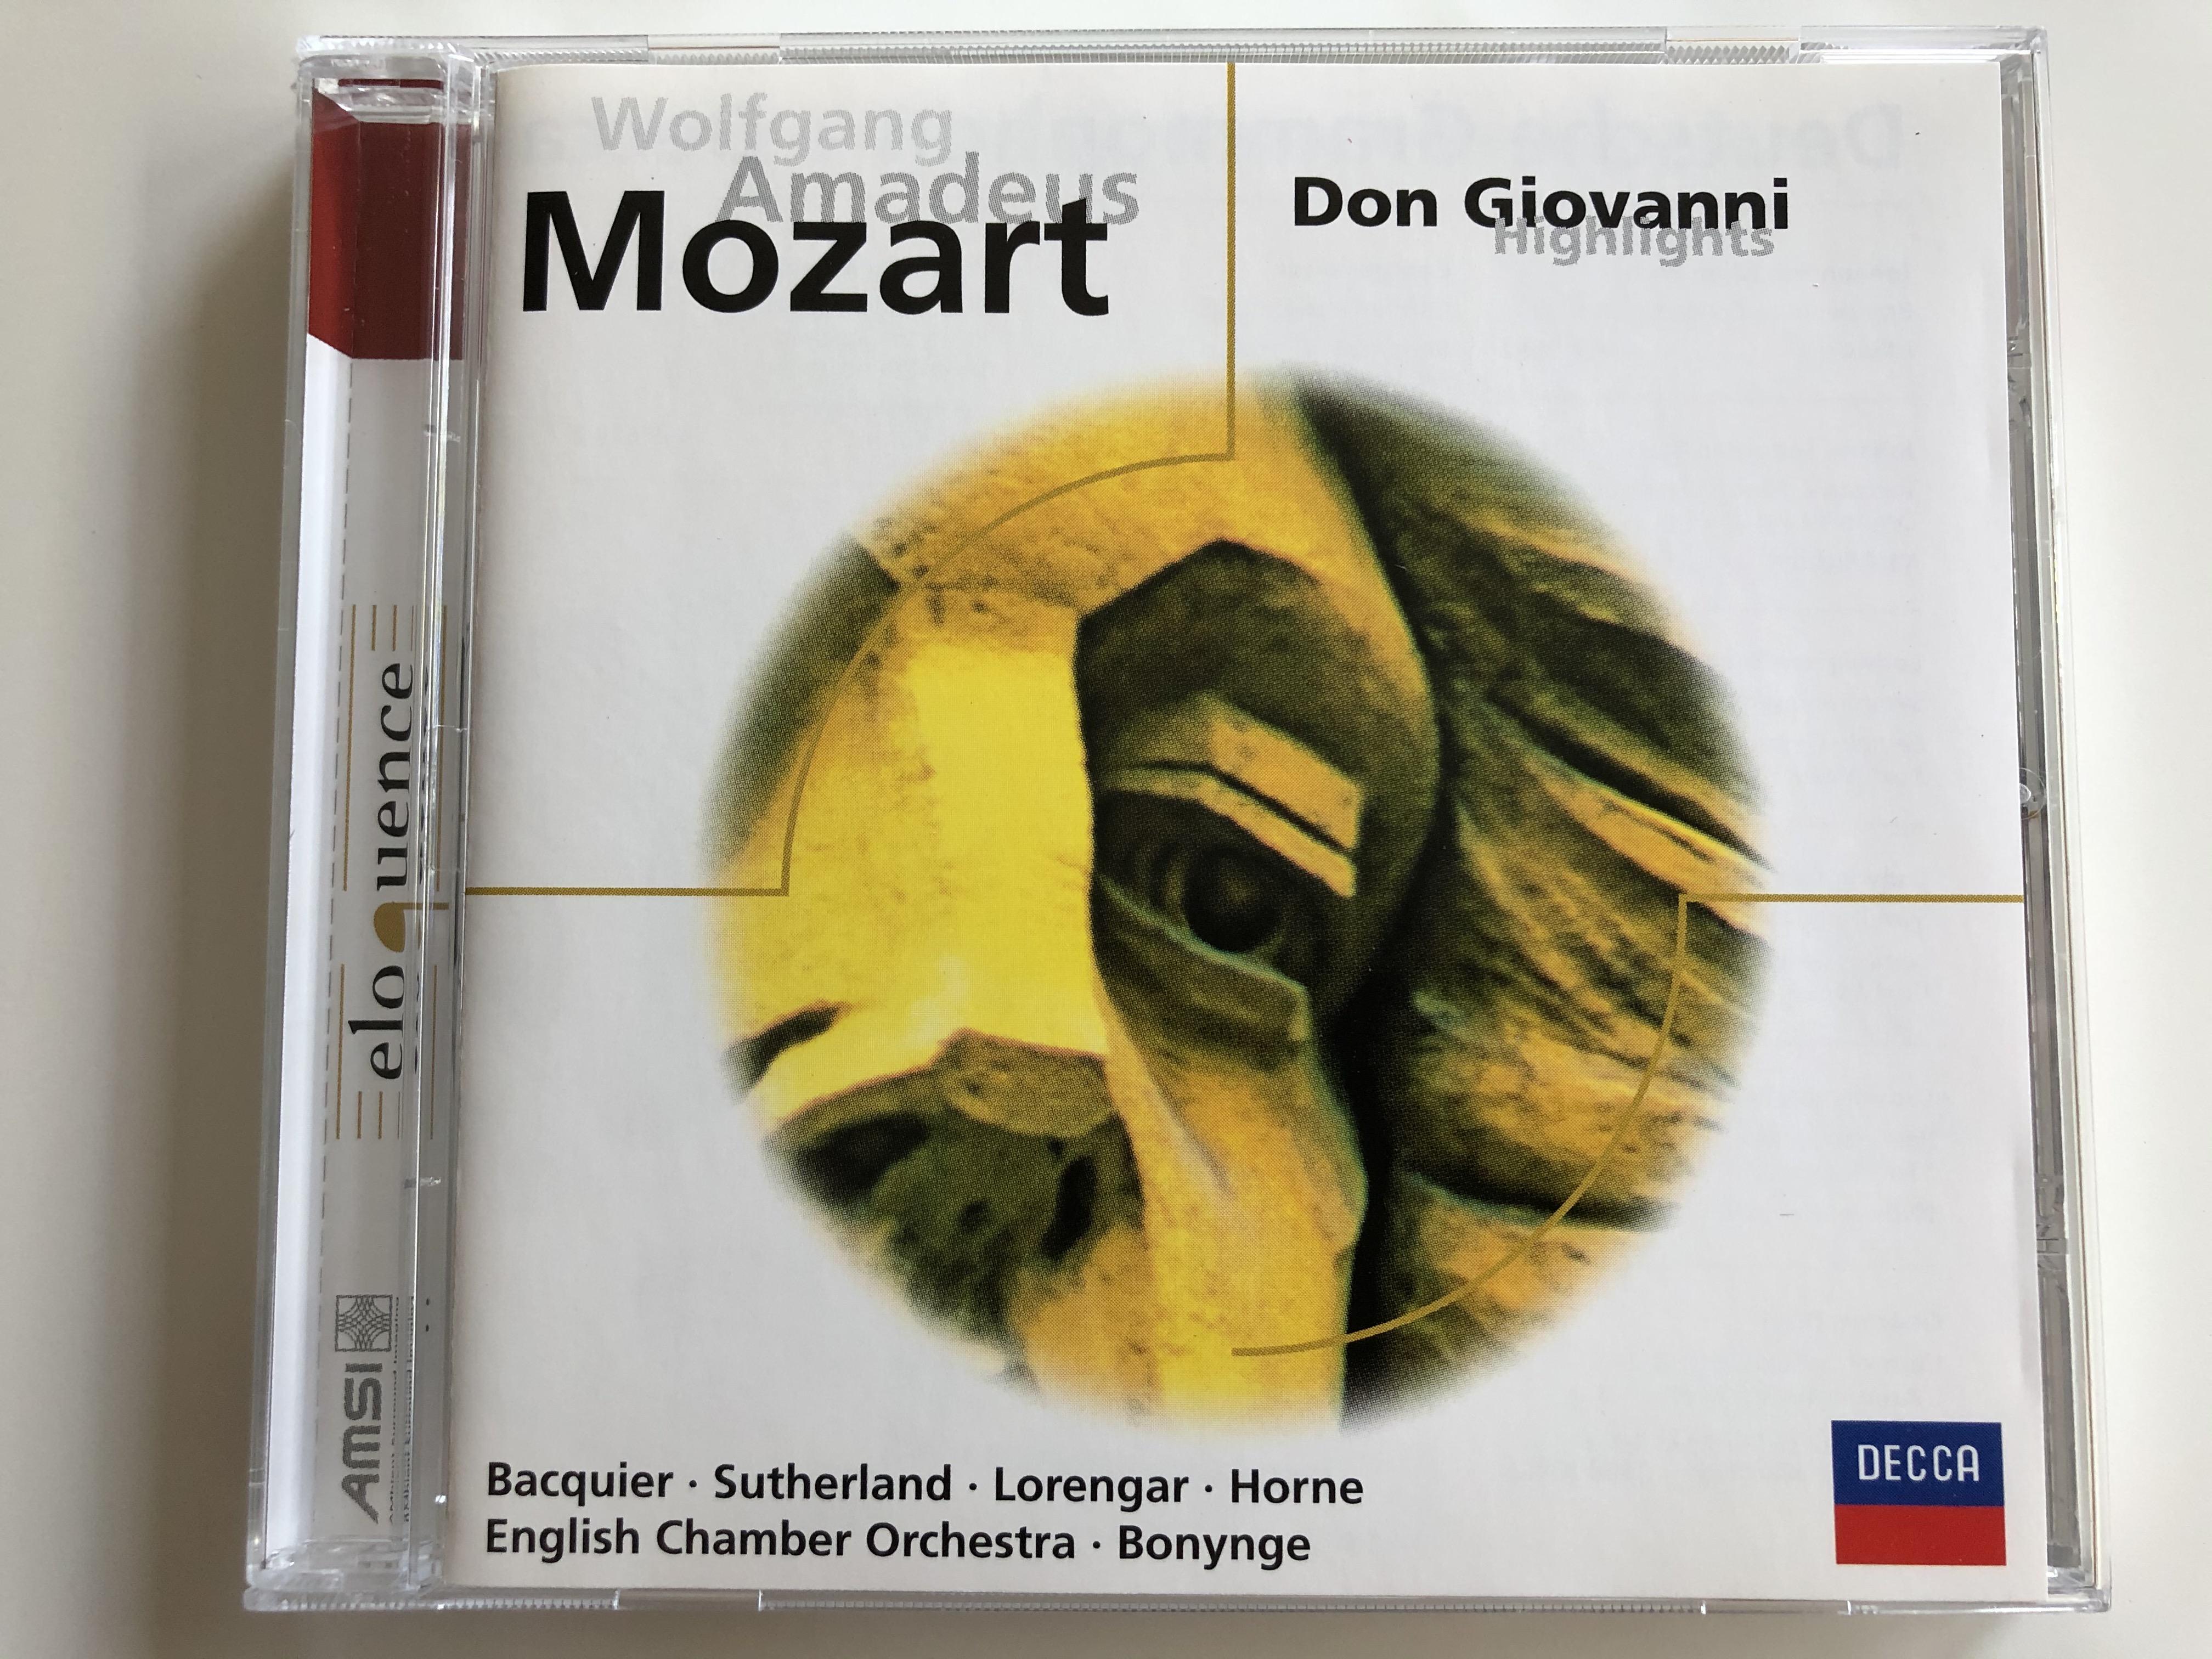 wolfgang-amadeus-mozart-don-giovanni-highlights-bacquier-sutherland-lorengar-horne-english-chamber-orchestra-bonynge-decca-audio-cd-1969-467-420-2-1-.jpg